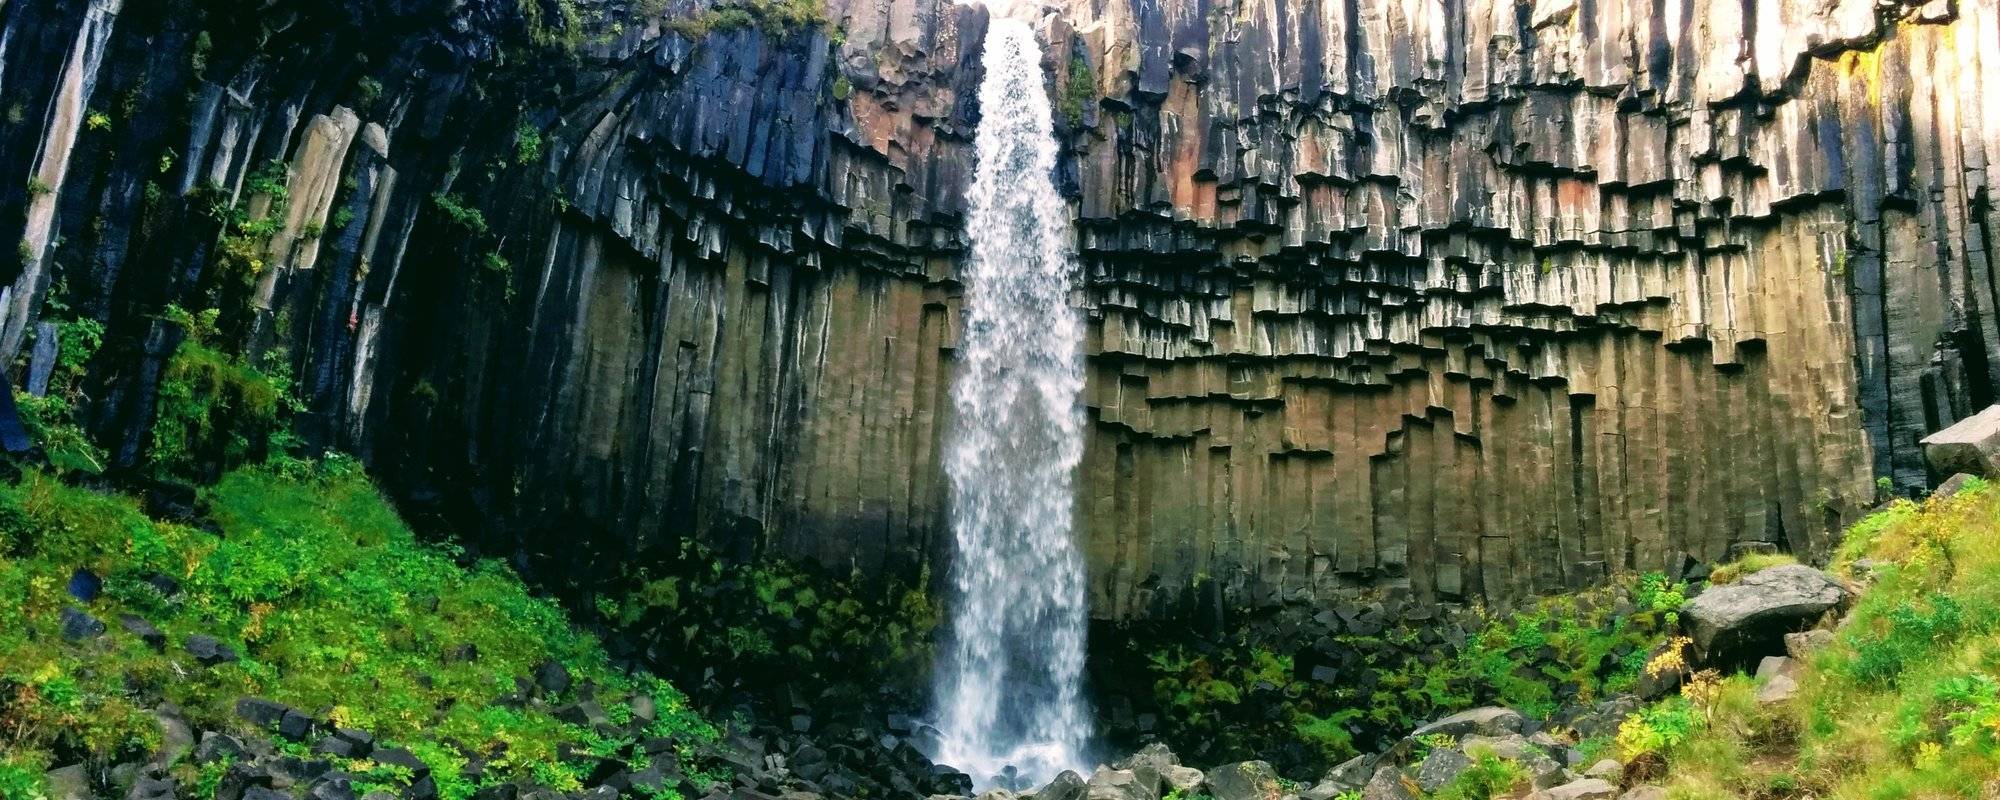 Fantastic Waterfalls: Svartifoss (Iceland) vs. Giant's Causeway (Northern Ireland)